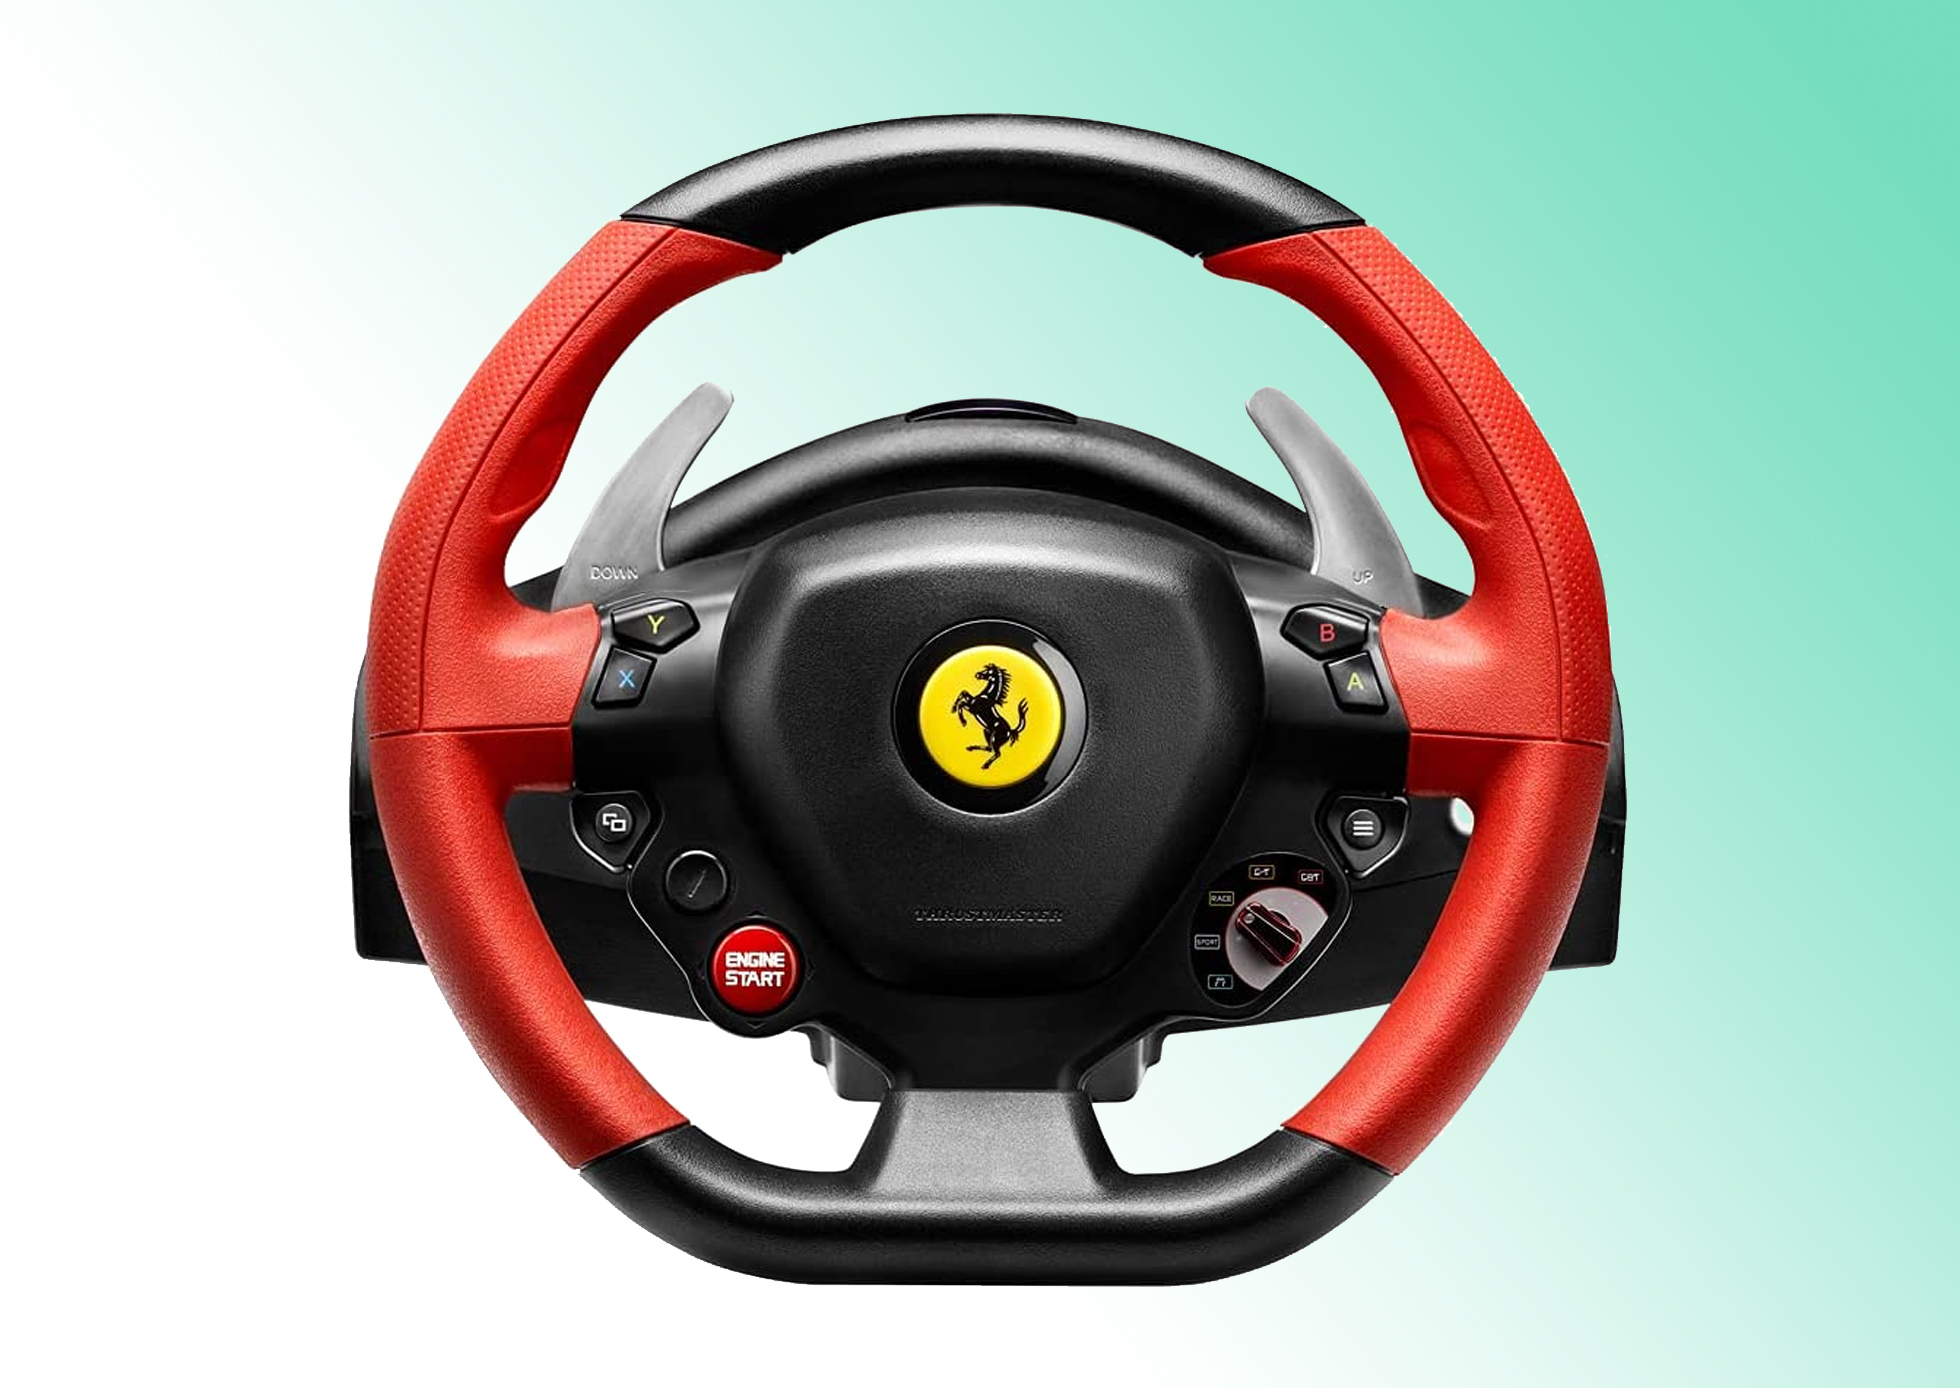 Testes e opiniões sobre o volante Thrustmaster Ferrari 458 Spider